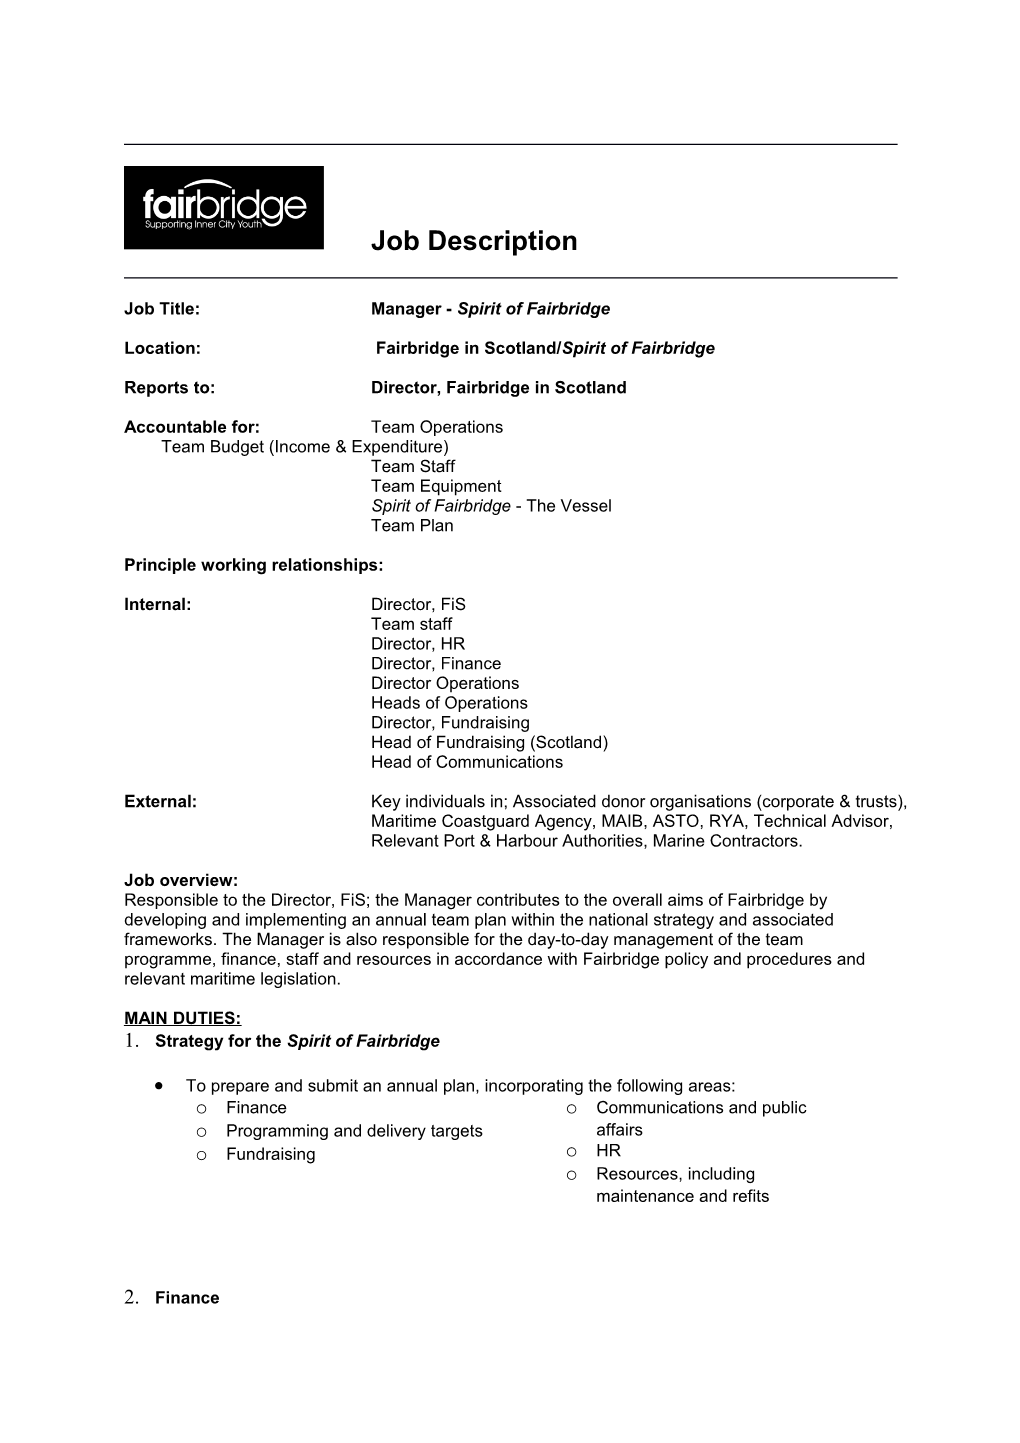 Job Title: Manager - Spirit of Fairbridge